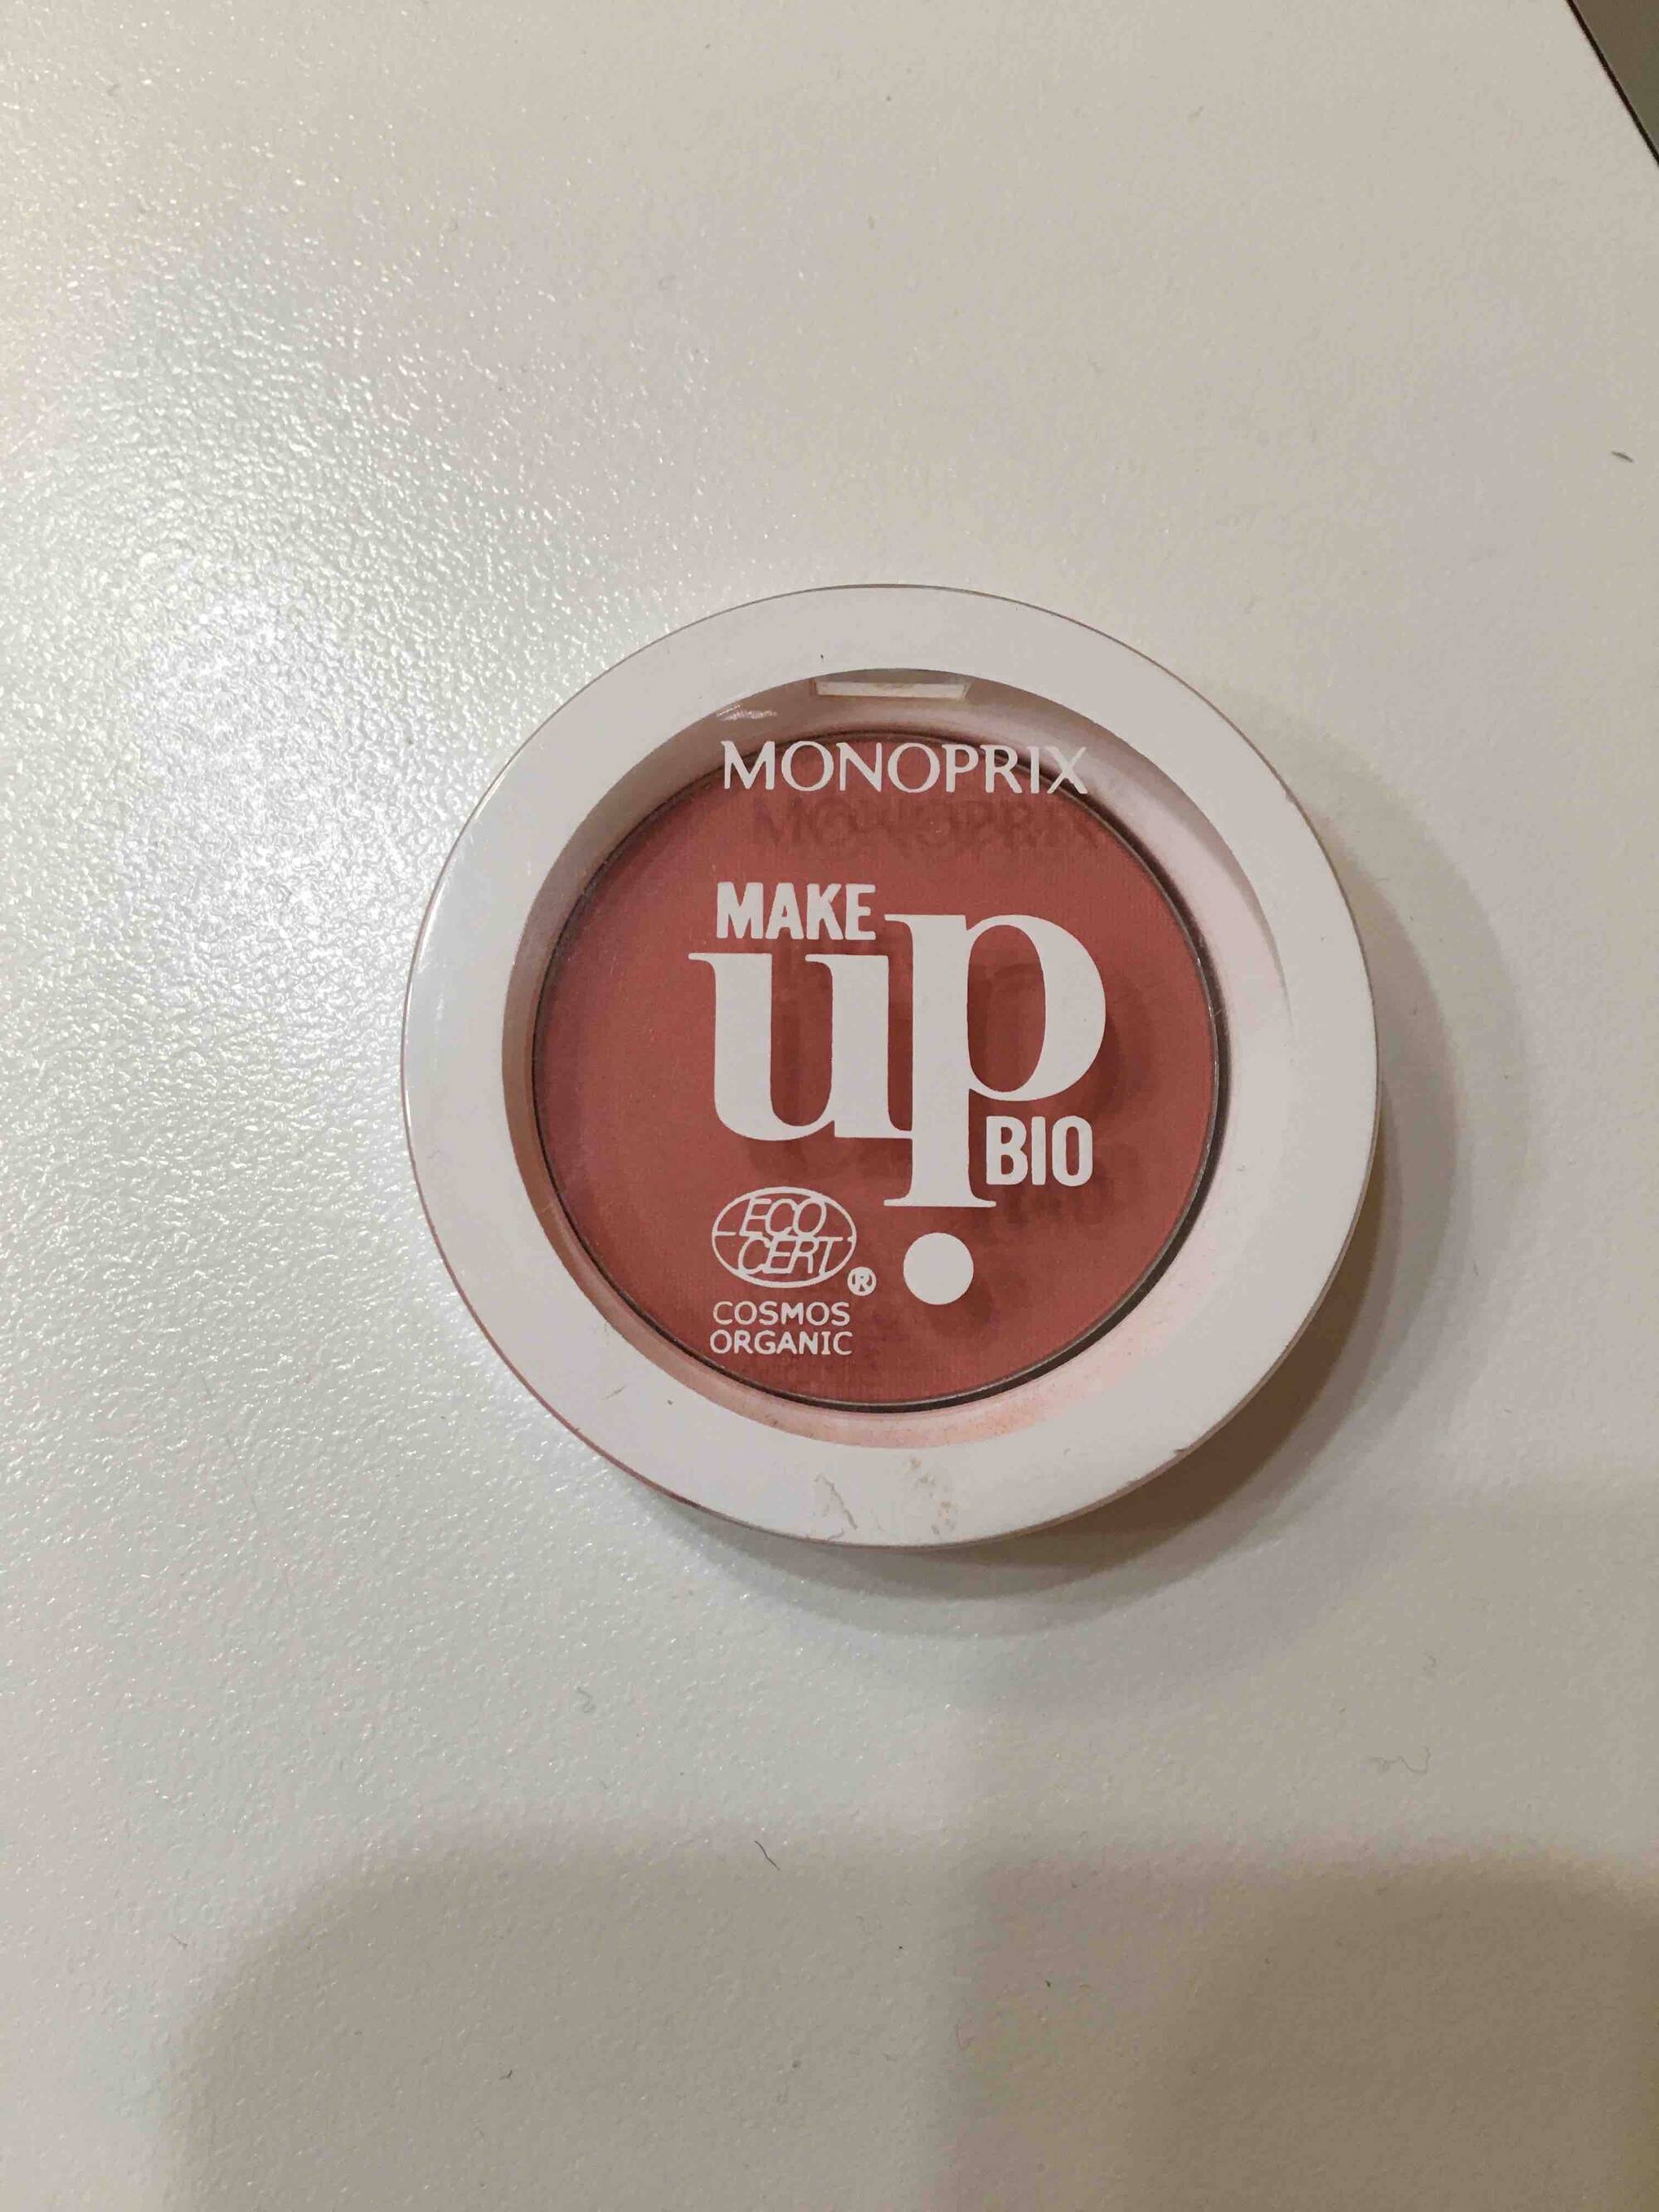 MONOPRIX - Make up bio - Blush